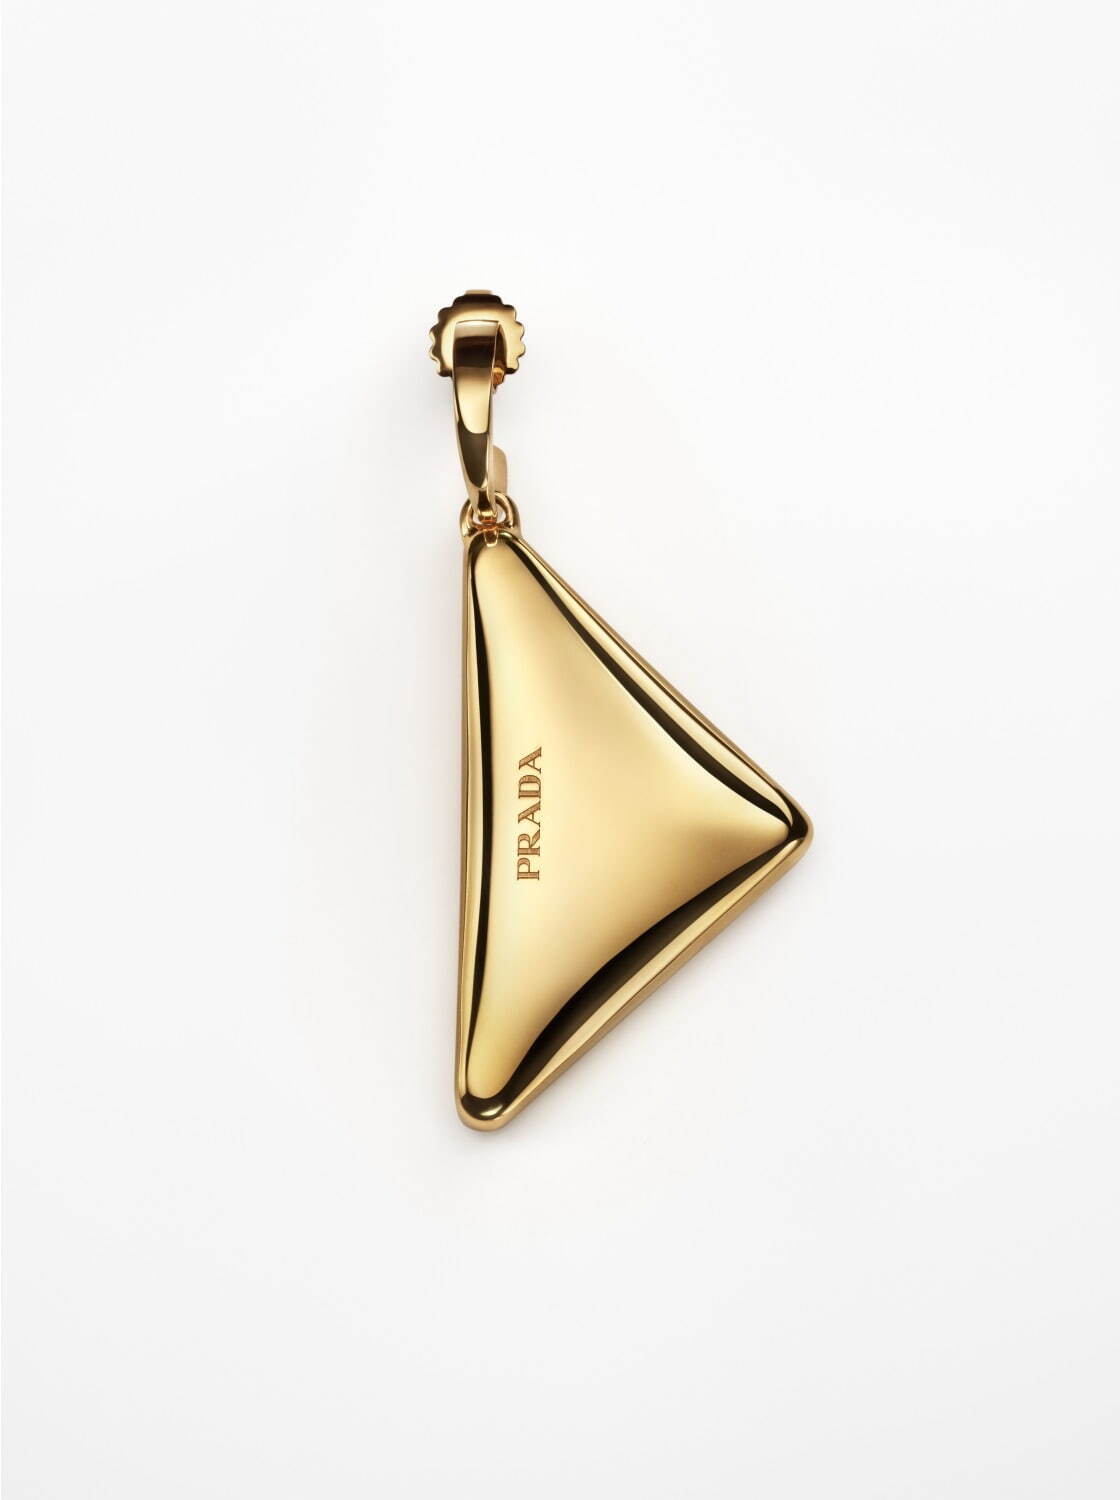 Eternal Gold  Mate to Order Earring 2,200,000円
※予定価格